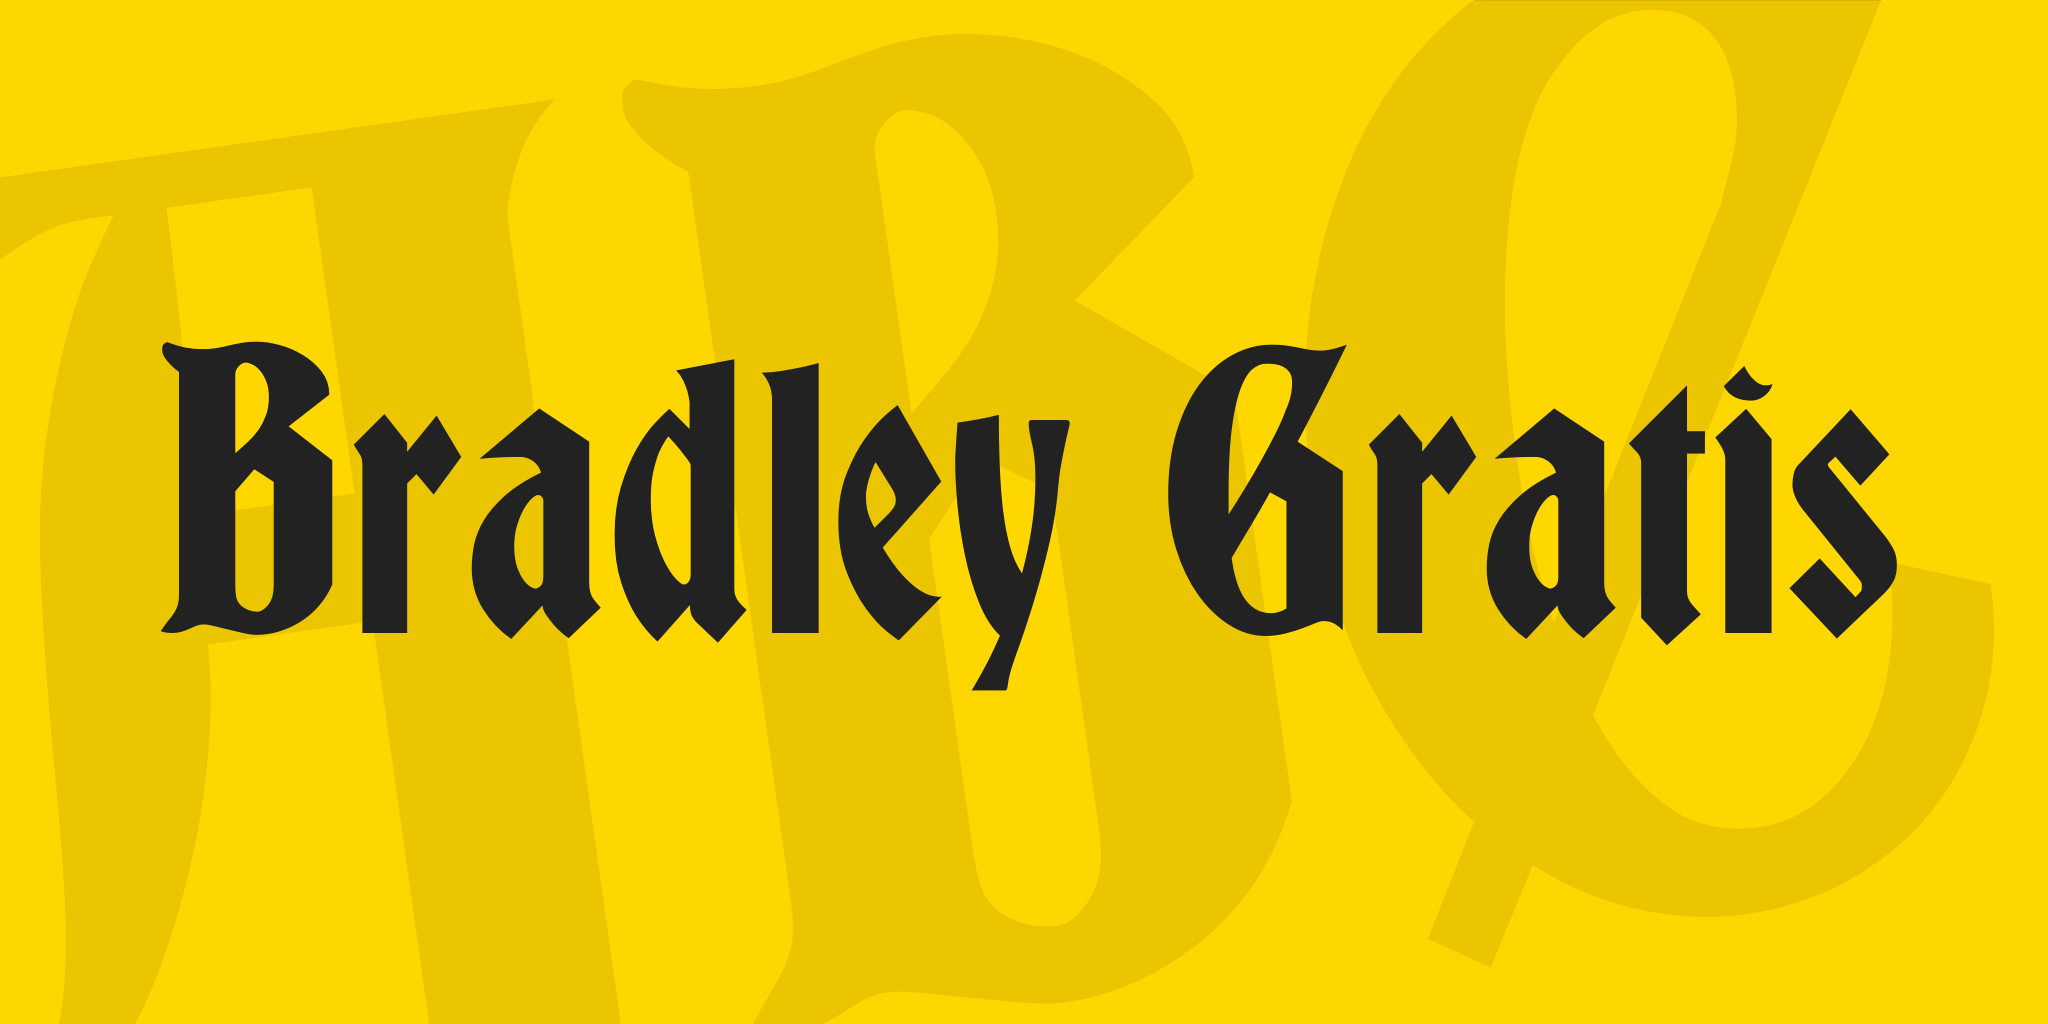 Bradley Gratis